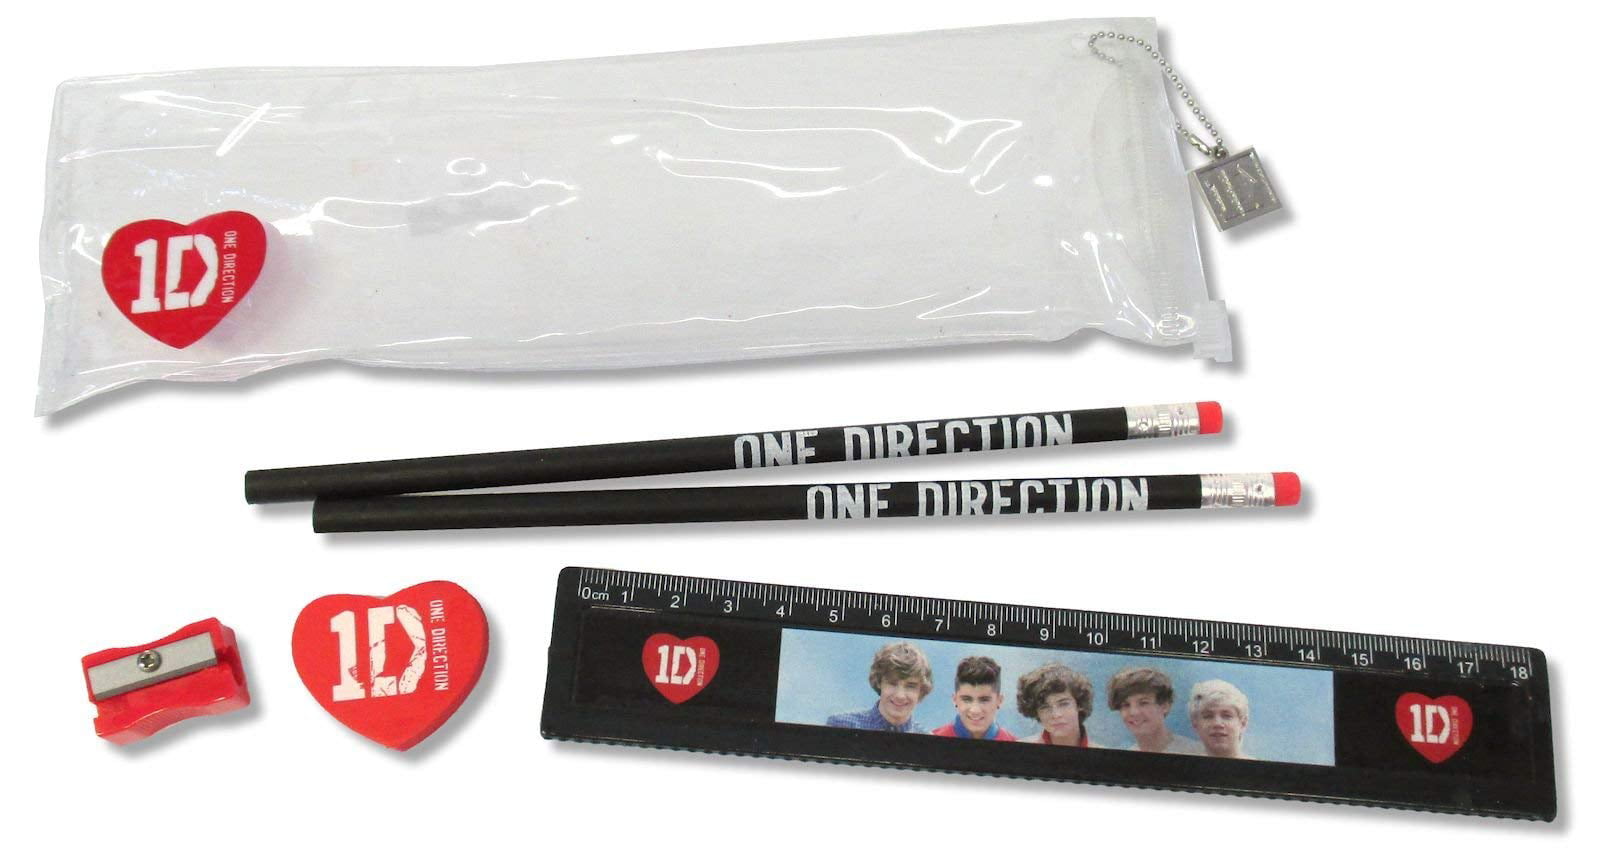 One Direction 1d Ballpens 2 Pack Writing Pens School Stationary Brand New 